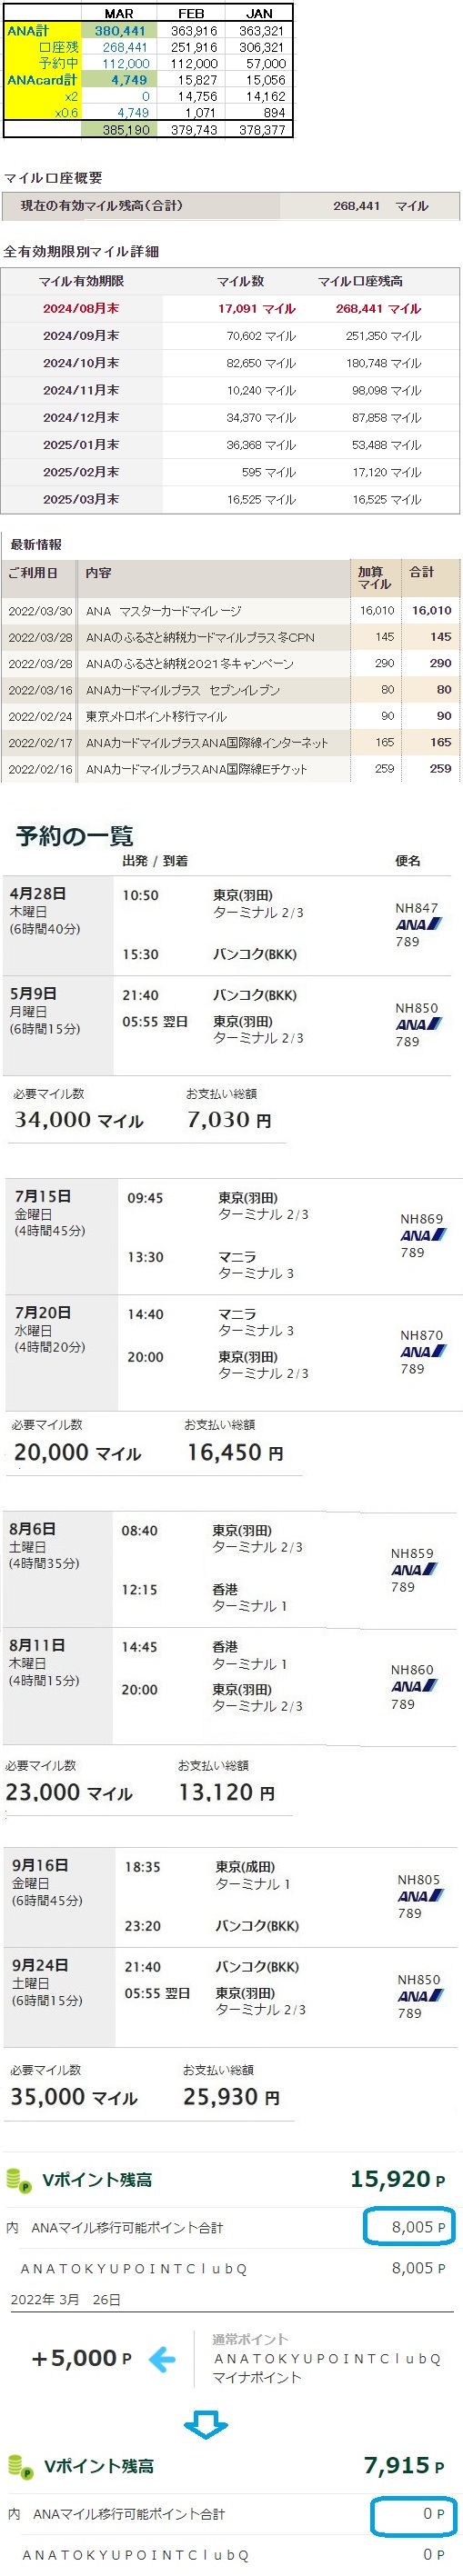 【ANAマイル】 累計獲得967,941M→587,500M搭乗